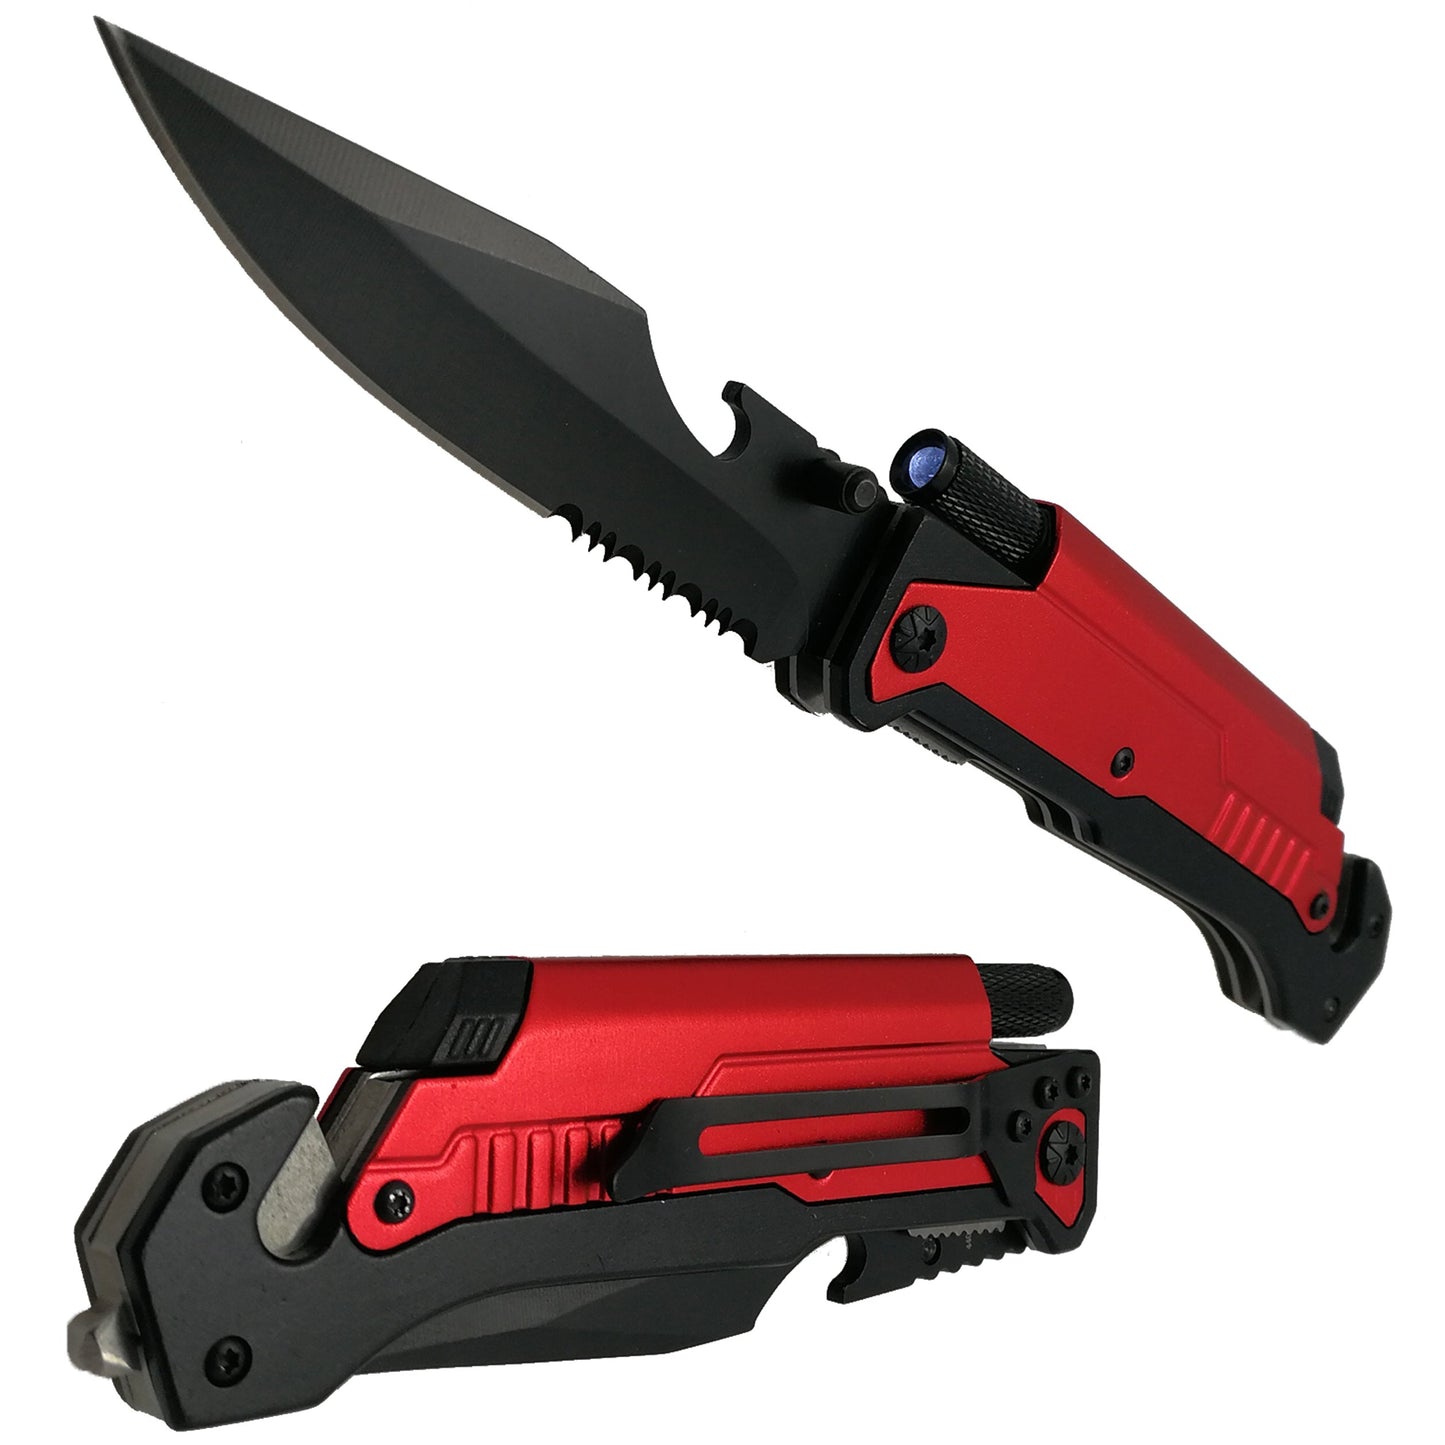 8 1/2" Folding Knife with LED light, cutter, glass breaker - Red